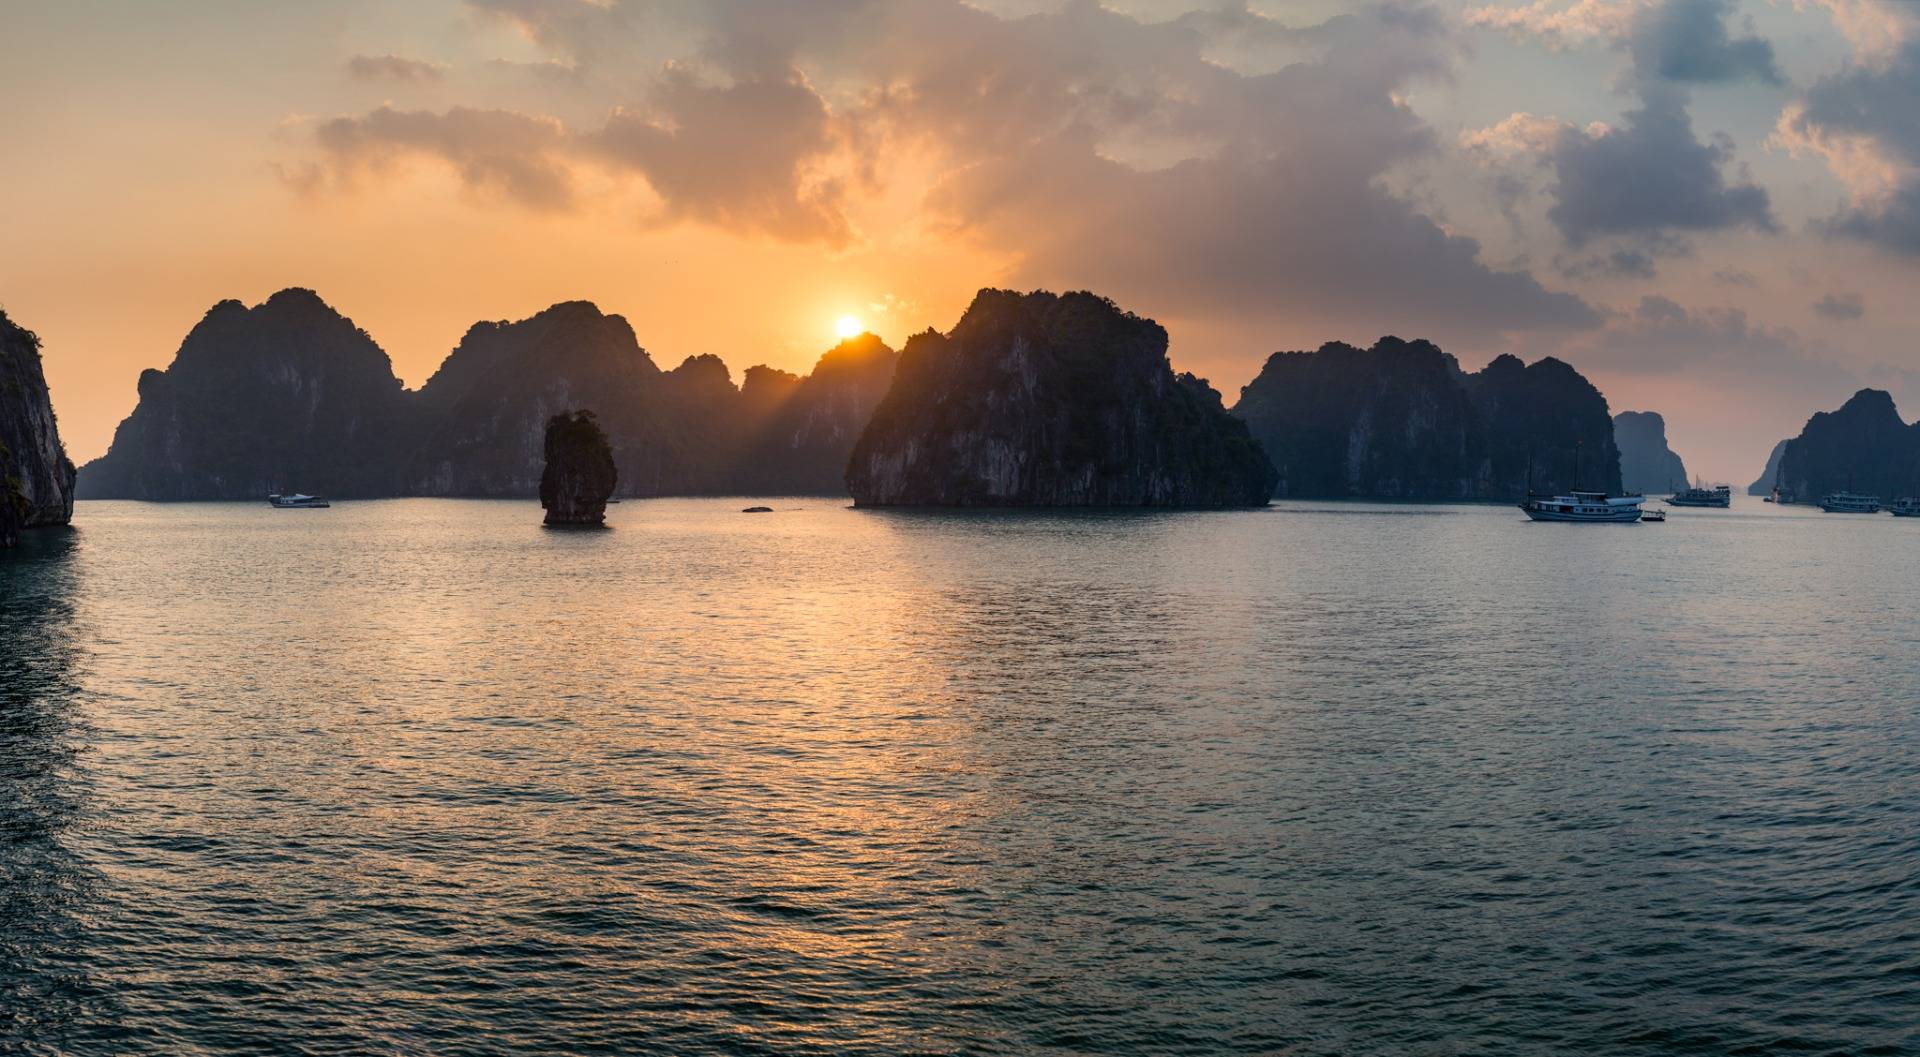 Should You Visit the Famous Ha Long Bay in Vietnam?